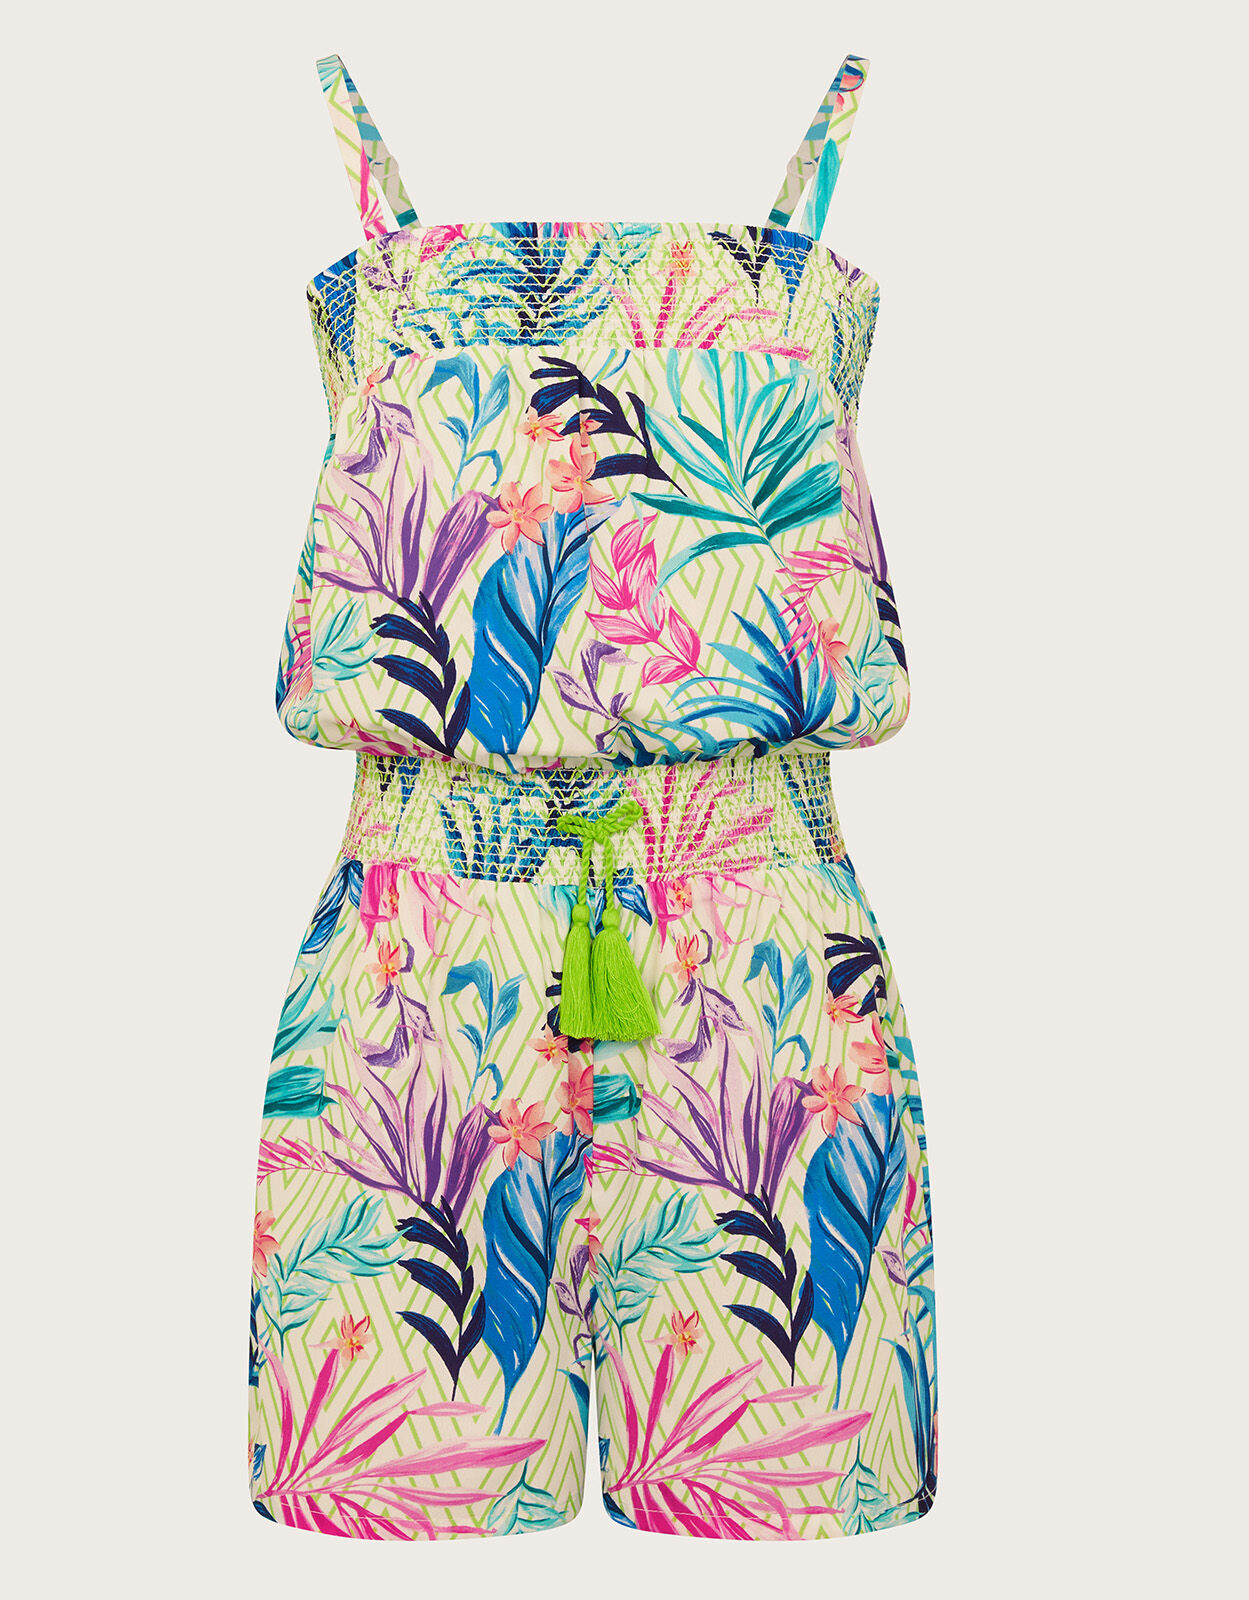 GEORGE ASDA TROPICAL Floral Print Jumpsuit Size 12 £12.50 - PicClick UK